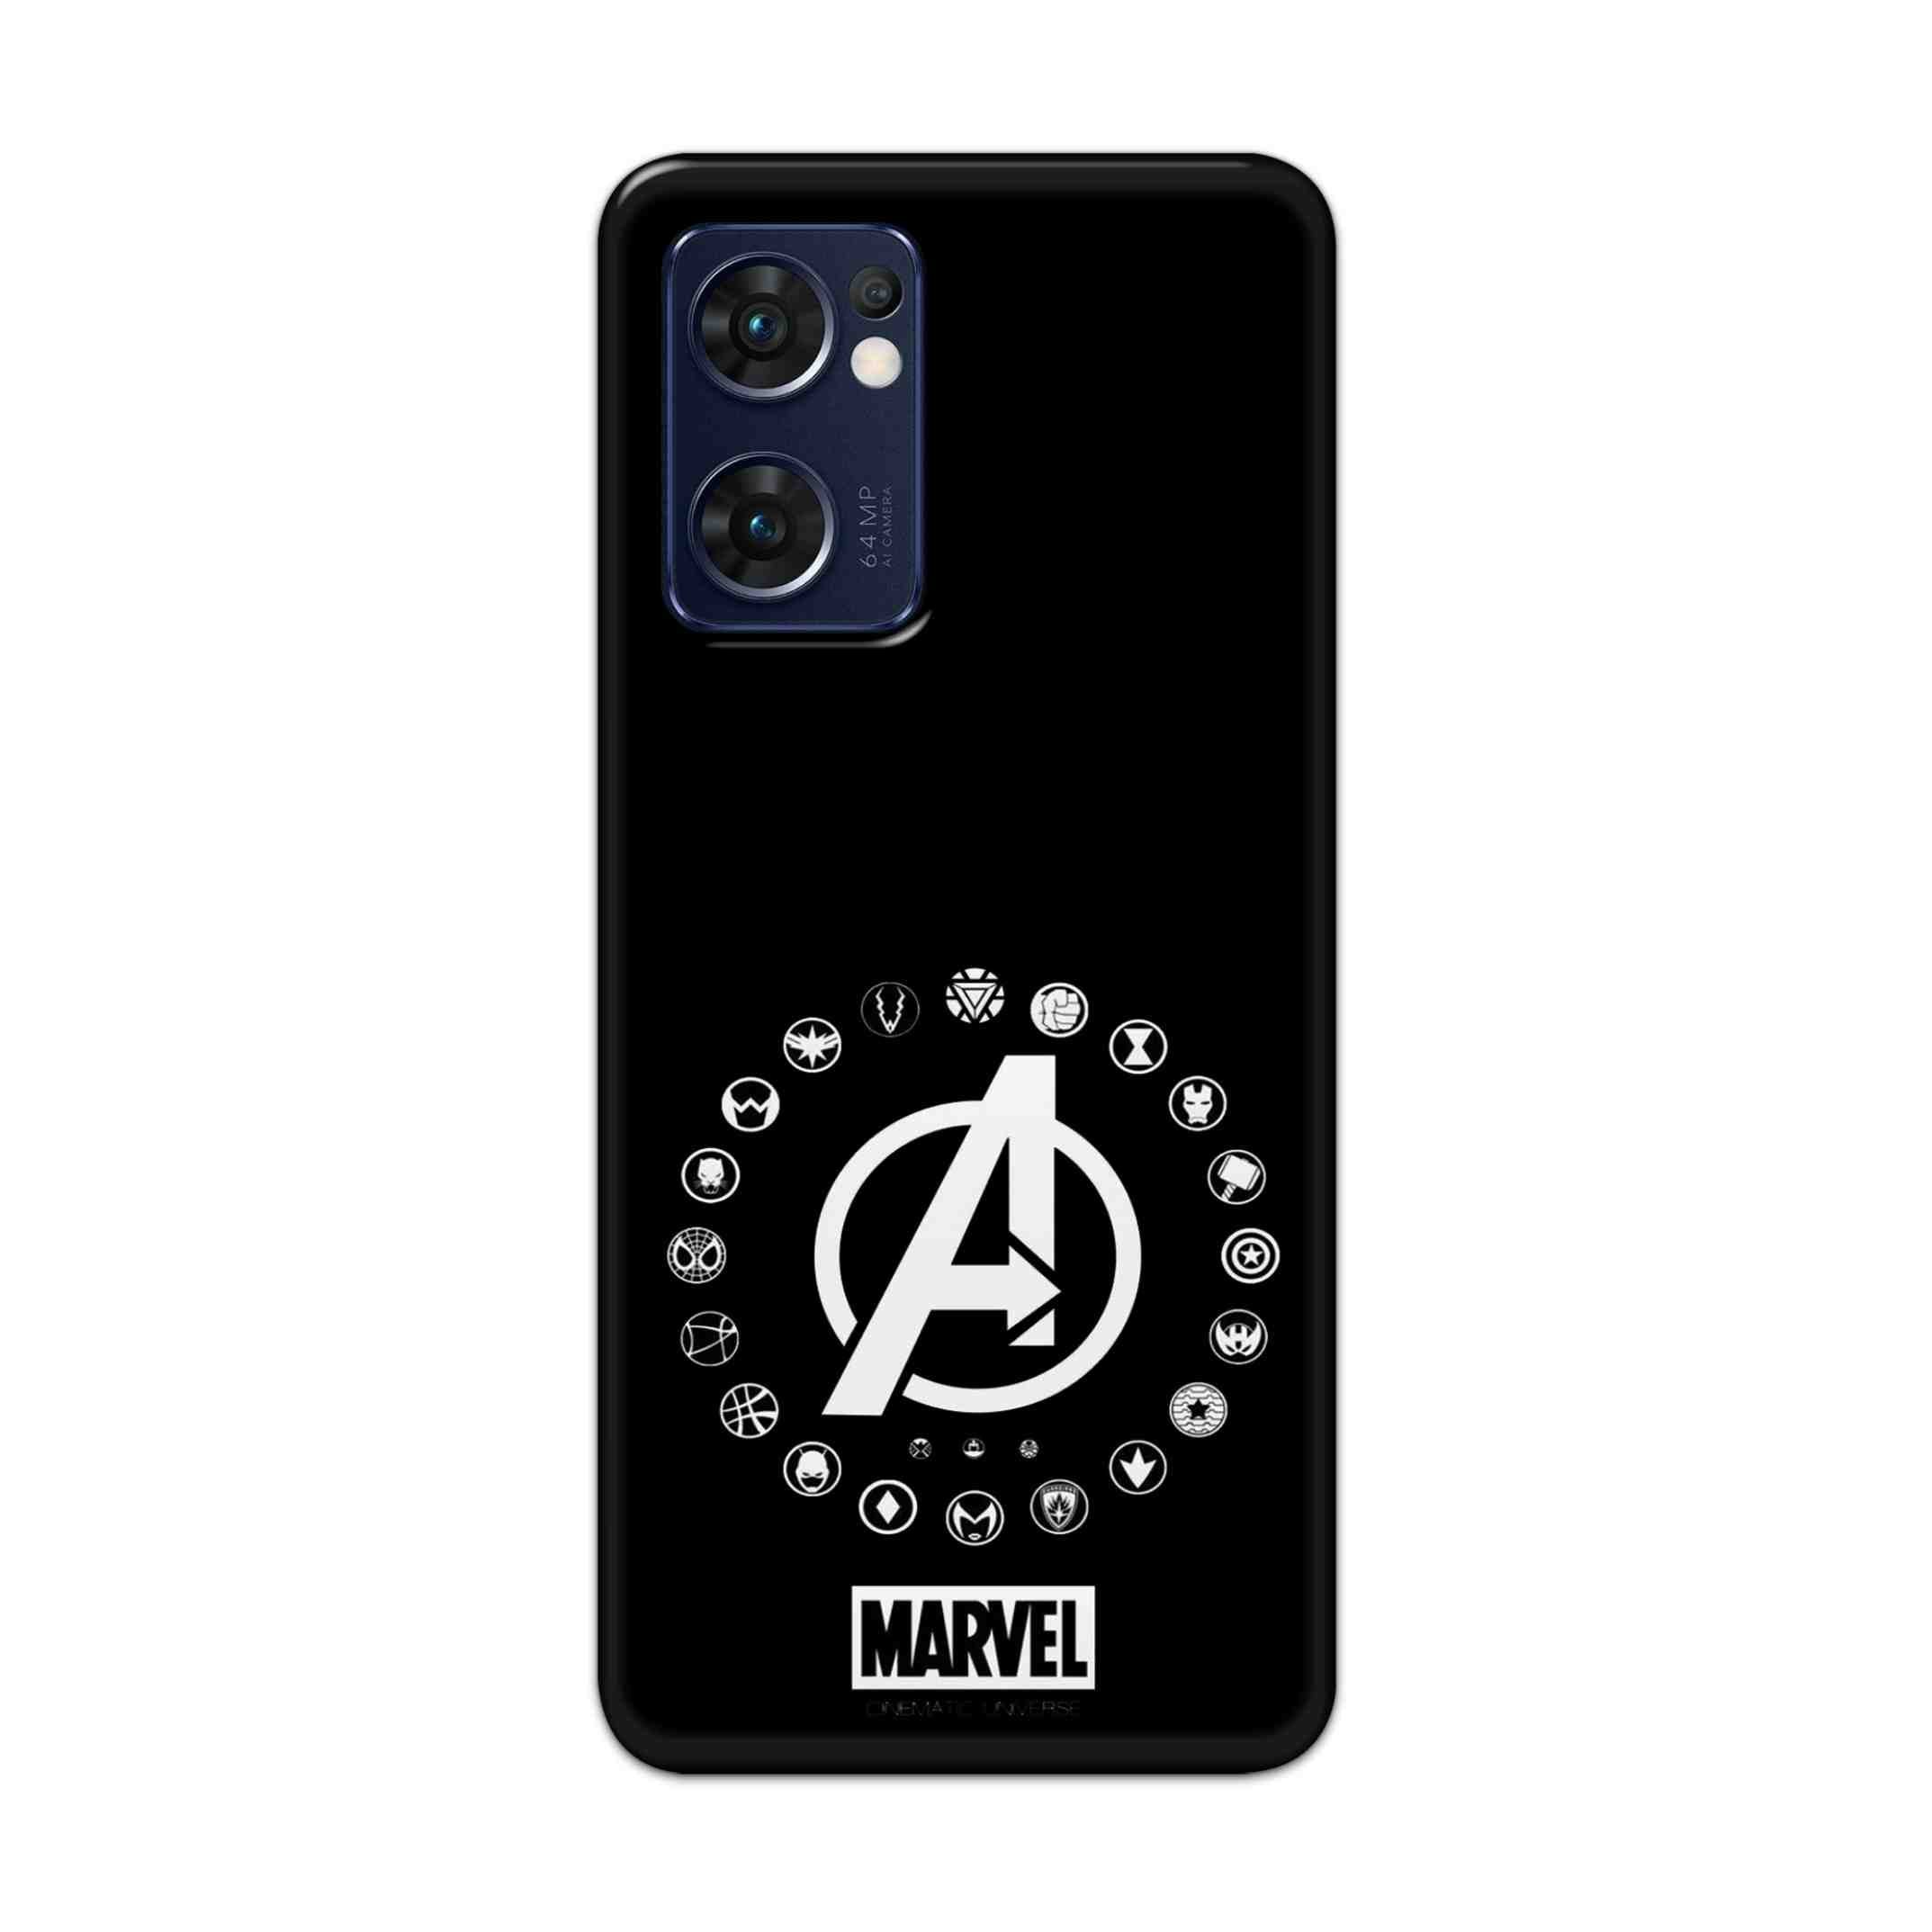 Buy Avengers Hard Back Mobile Phone Case Cover For Reno 7 5G Online